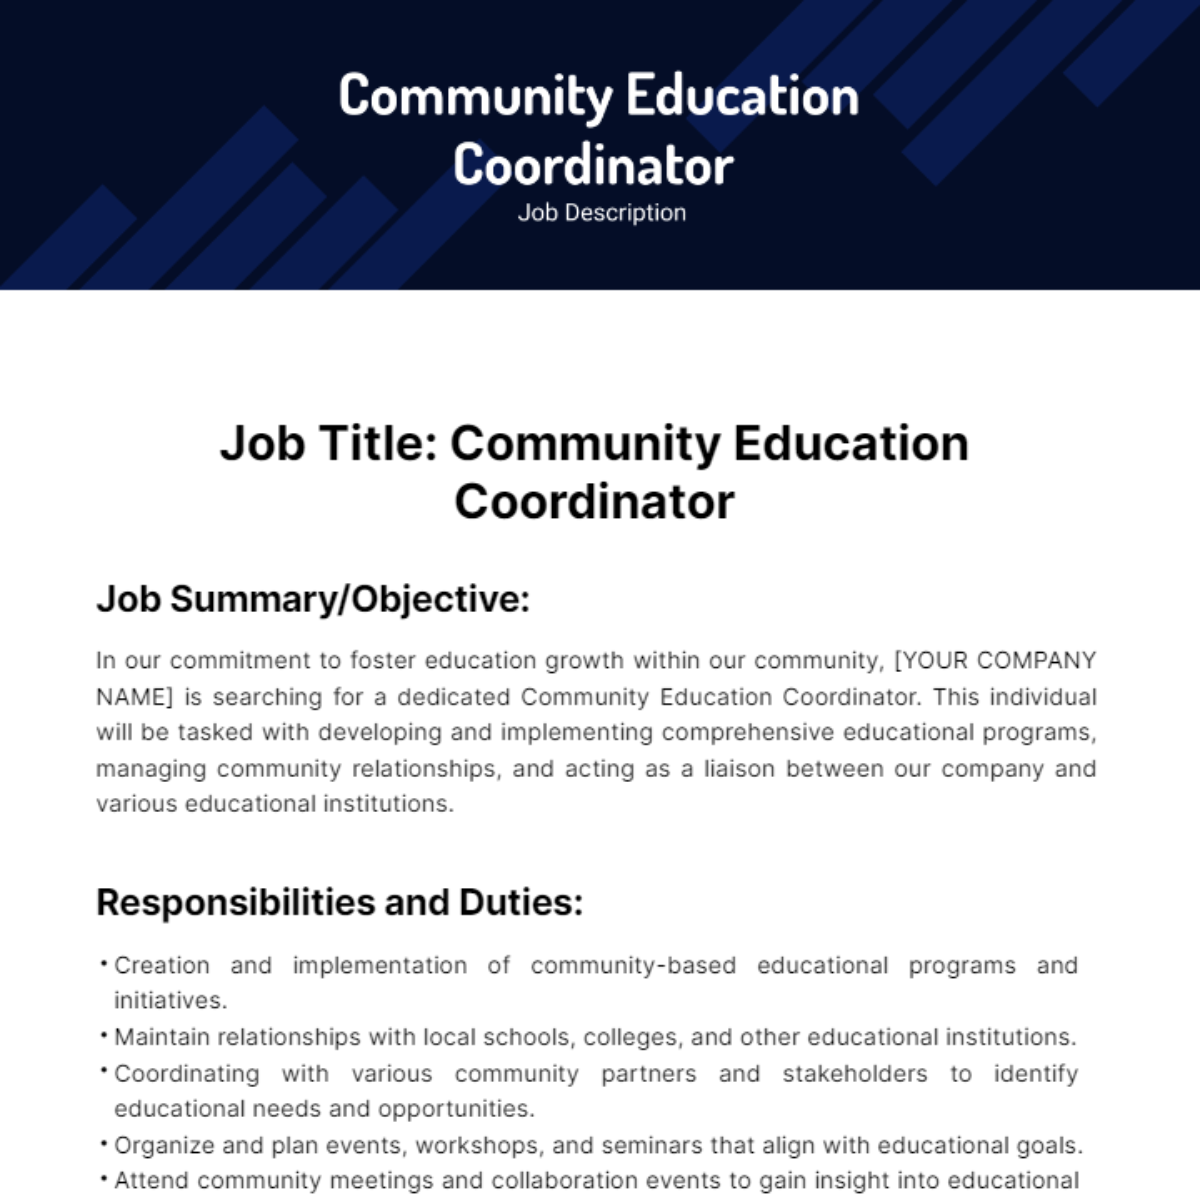 Community Education Coordinator Job Description Template